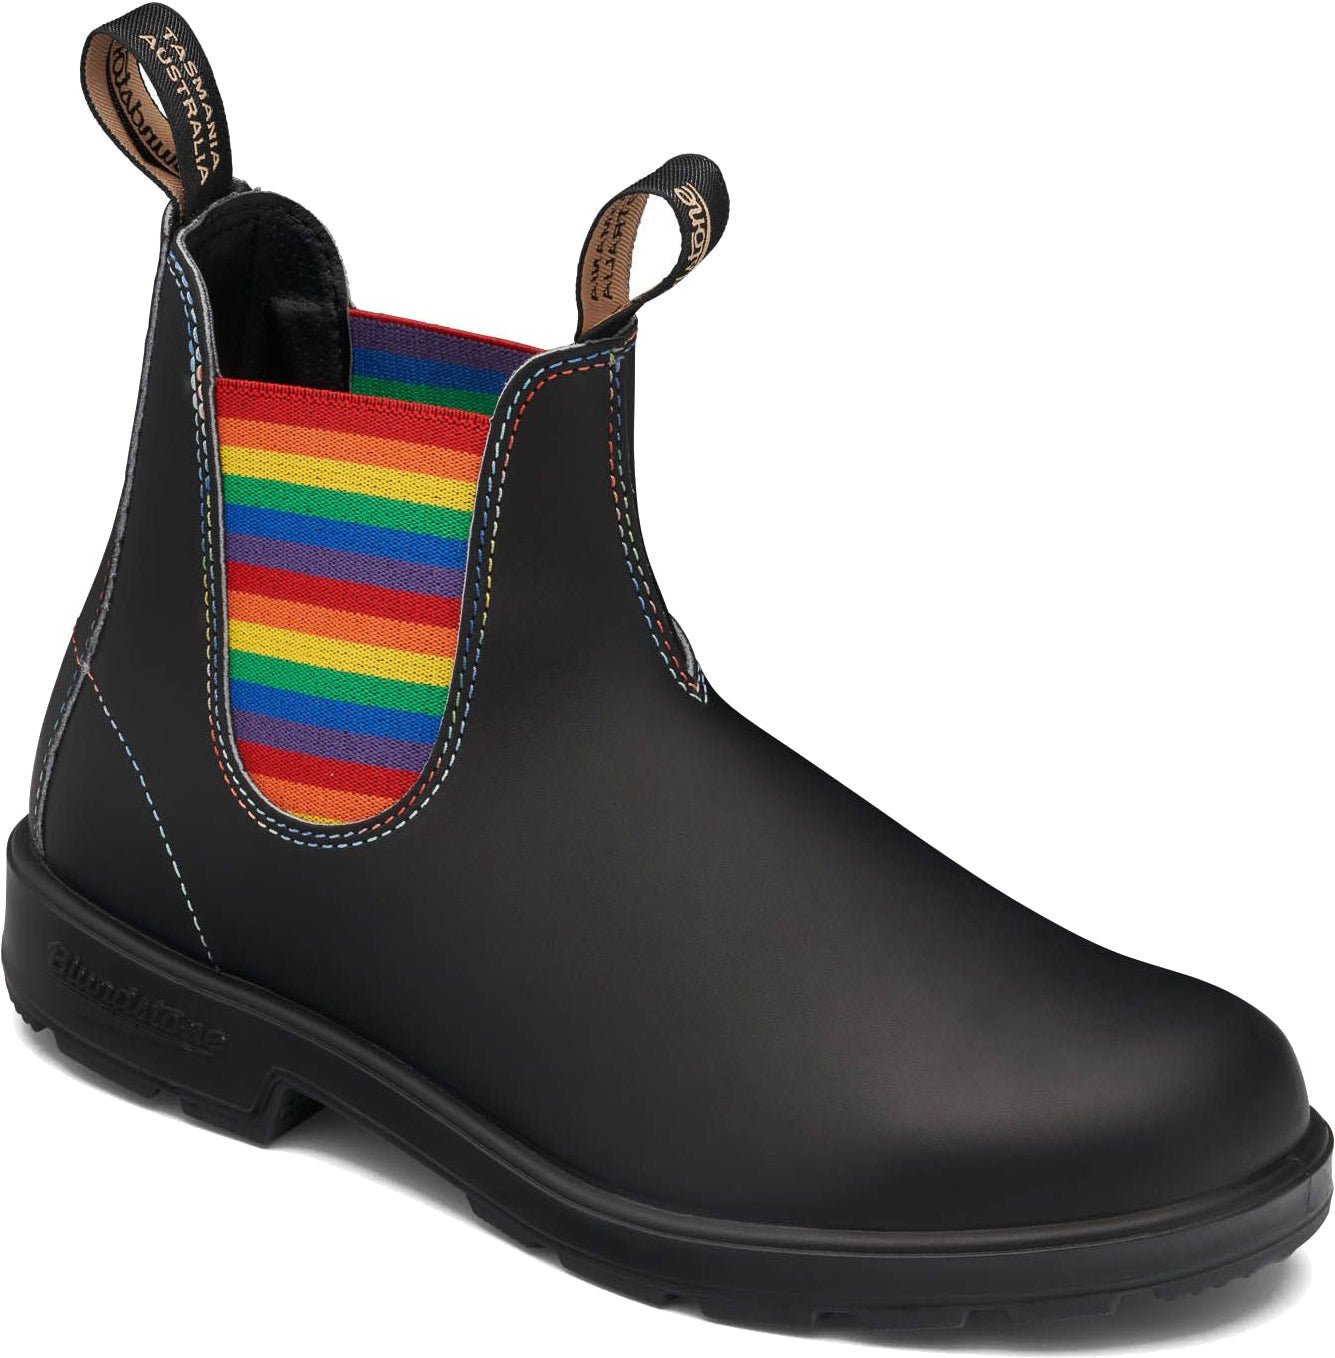 Blundstone 2105 Original Black with Rainbow - Grady’s Feet Essentials - Blundstone